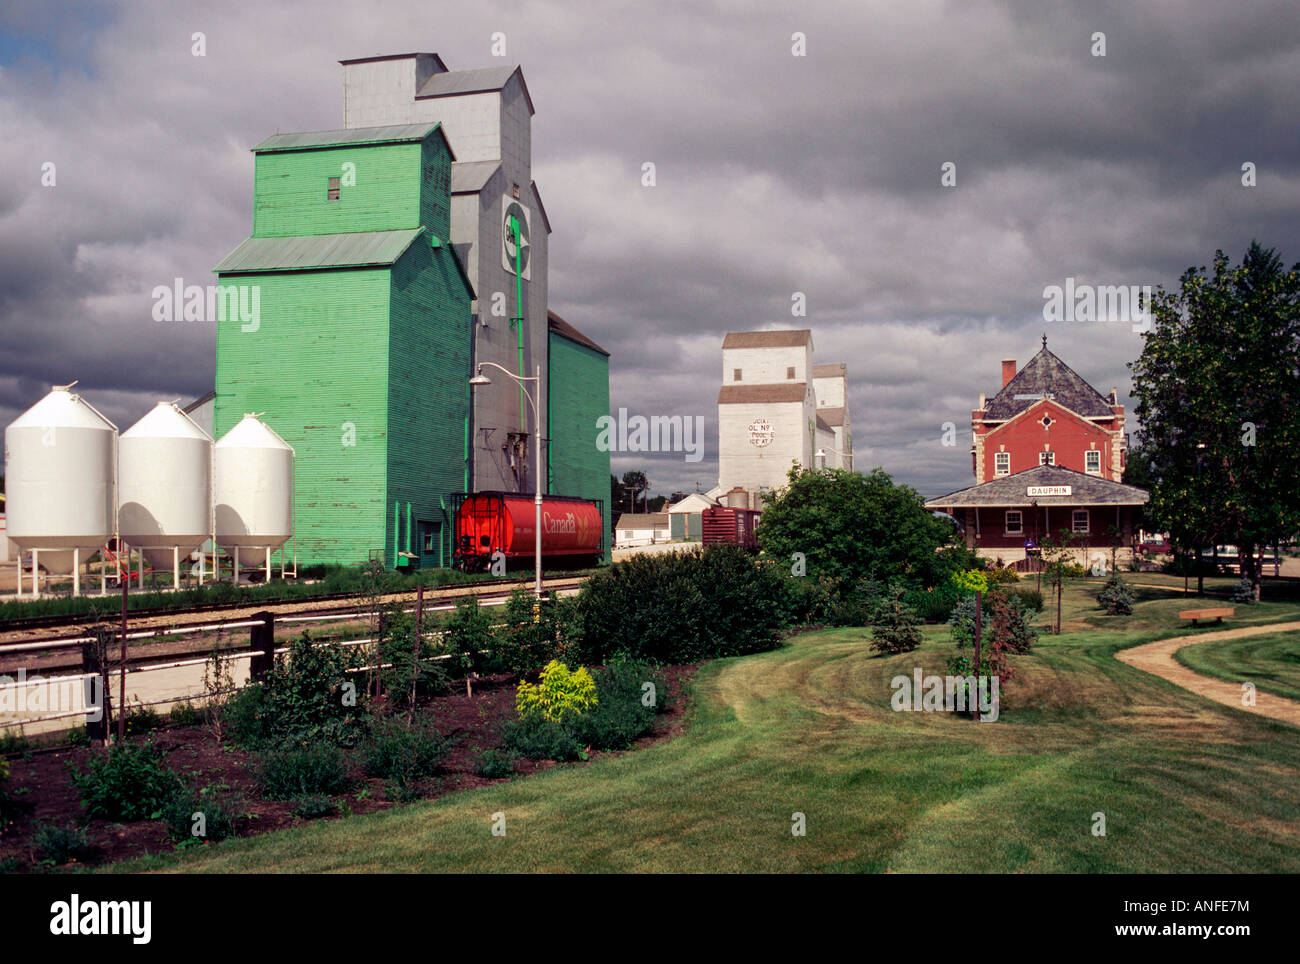 Grain silos and trains, Dauphin, Manitoba, canada Stock Photo